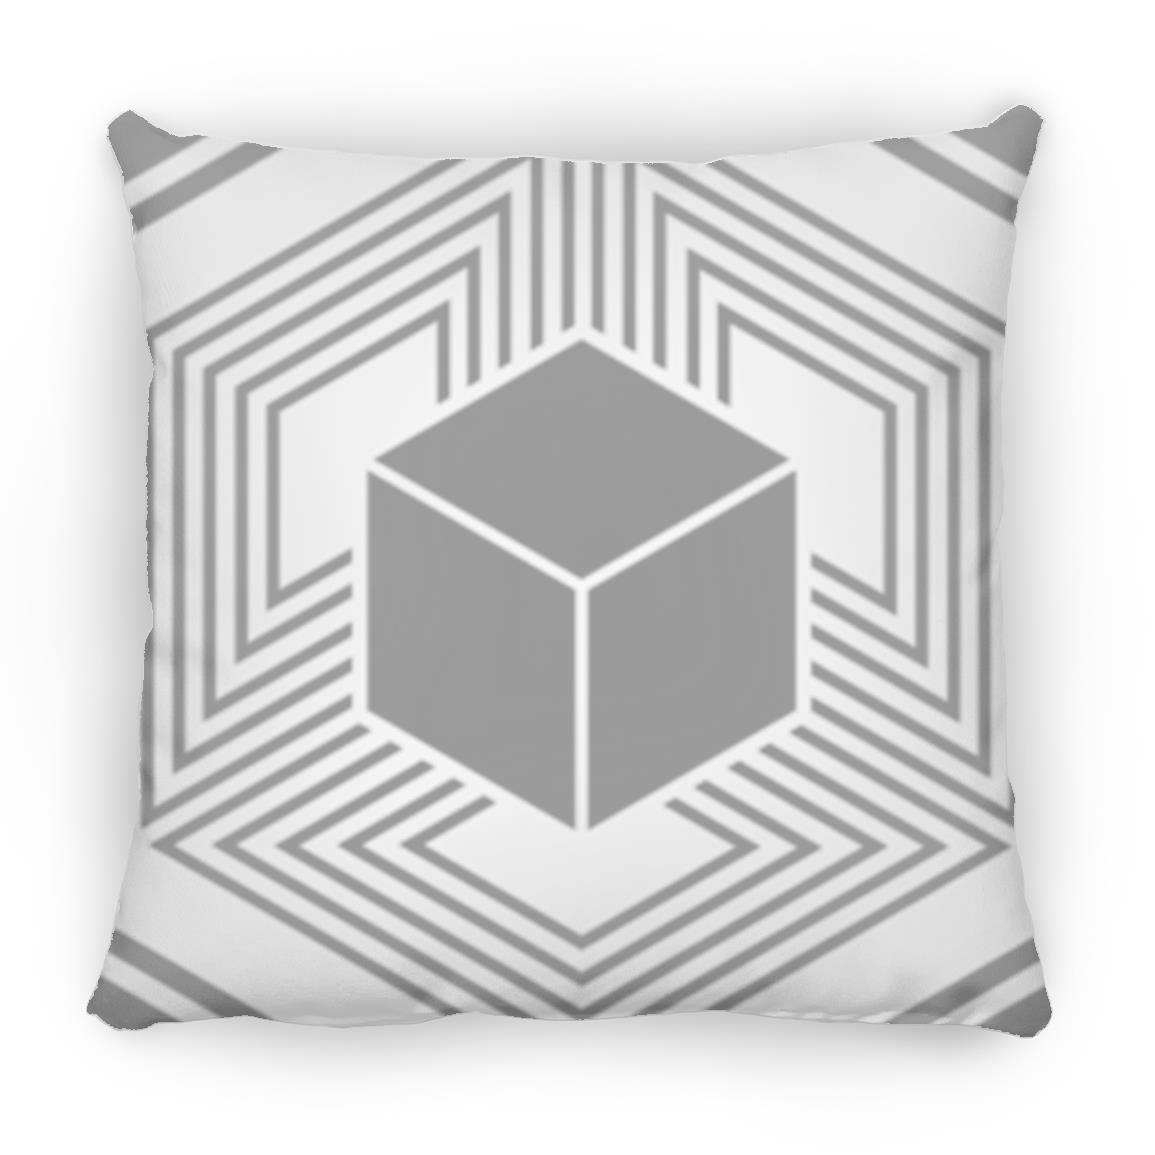 Crop Circle Pillow - Vernham Dean - Shapes of Wisdom